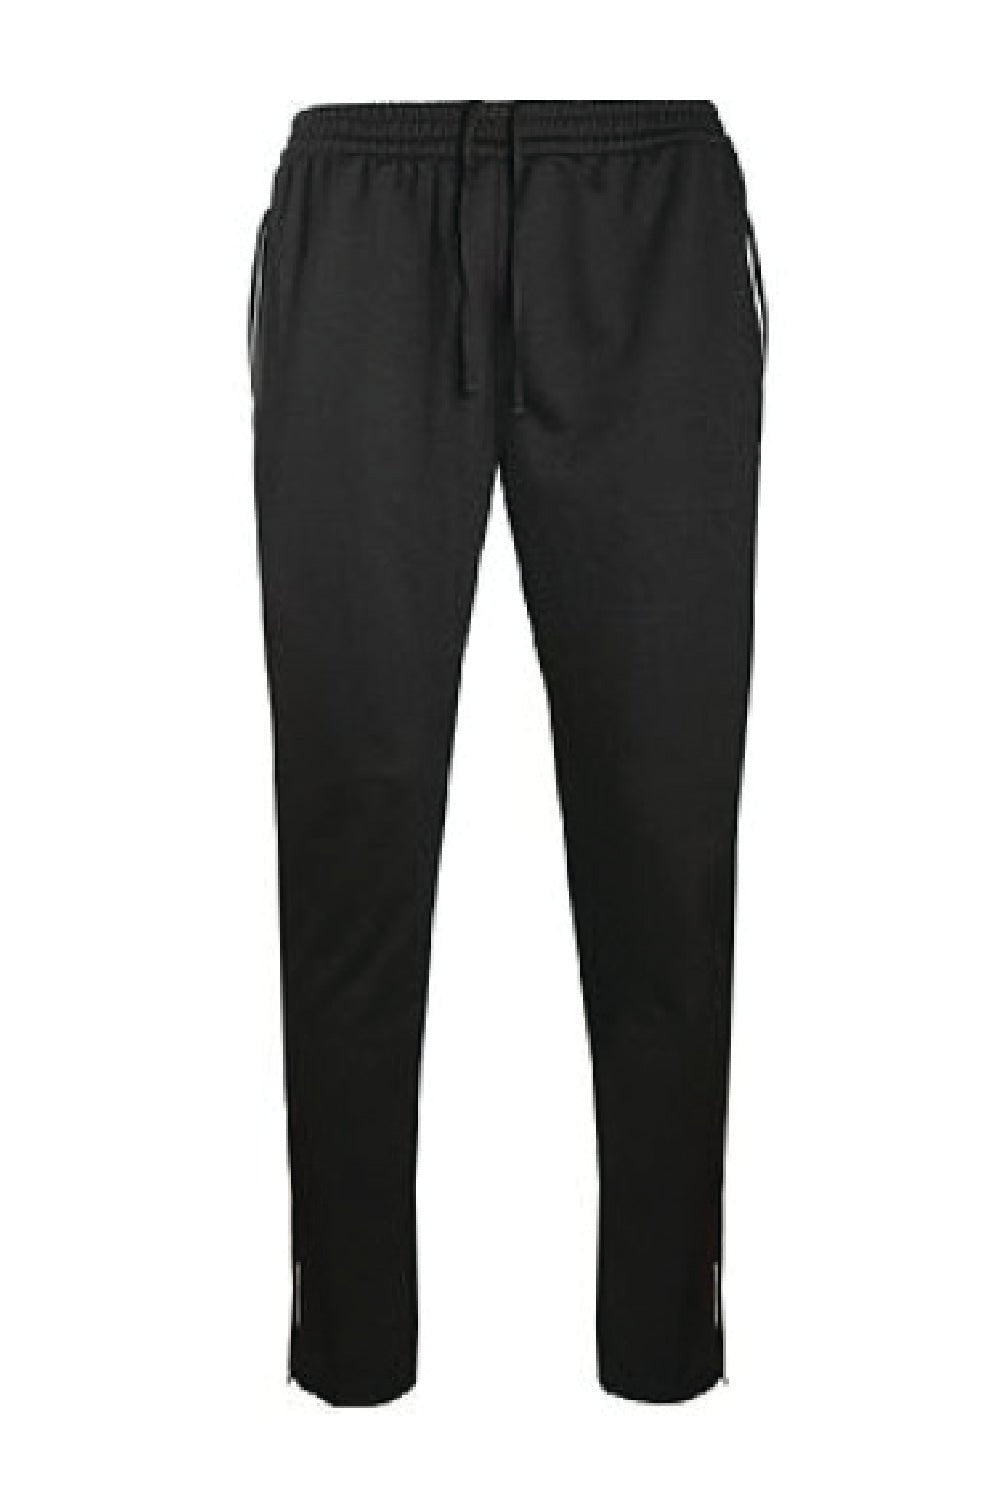 Jogging Bottoms (plain) - Black - Uniformwise Schoolwear